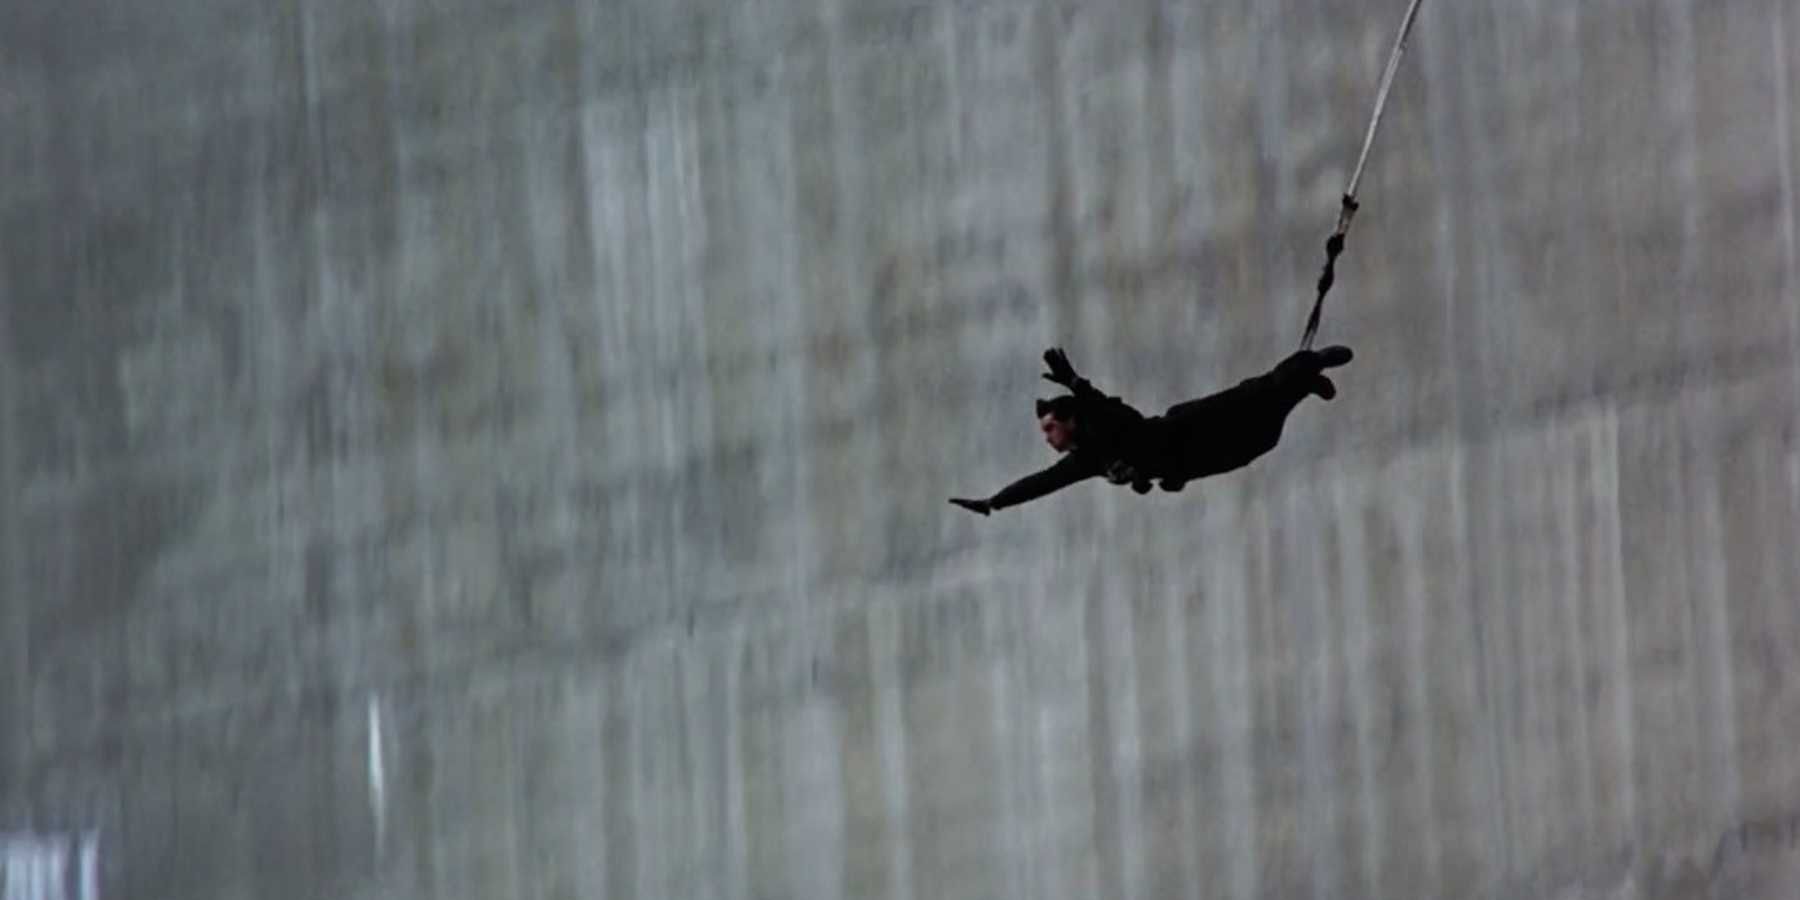 James Bond bunjee jumping off a bridgein the opening scene of GoldenEye.